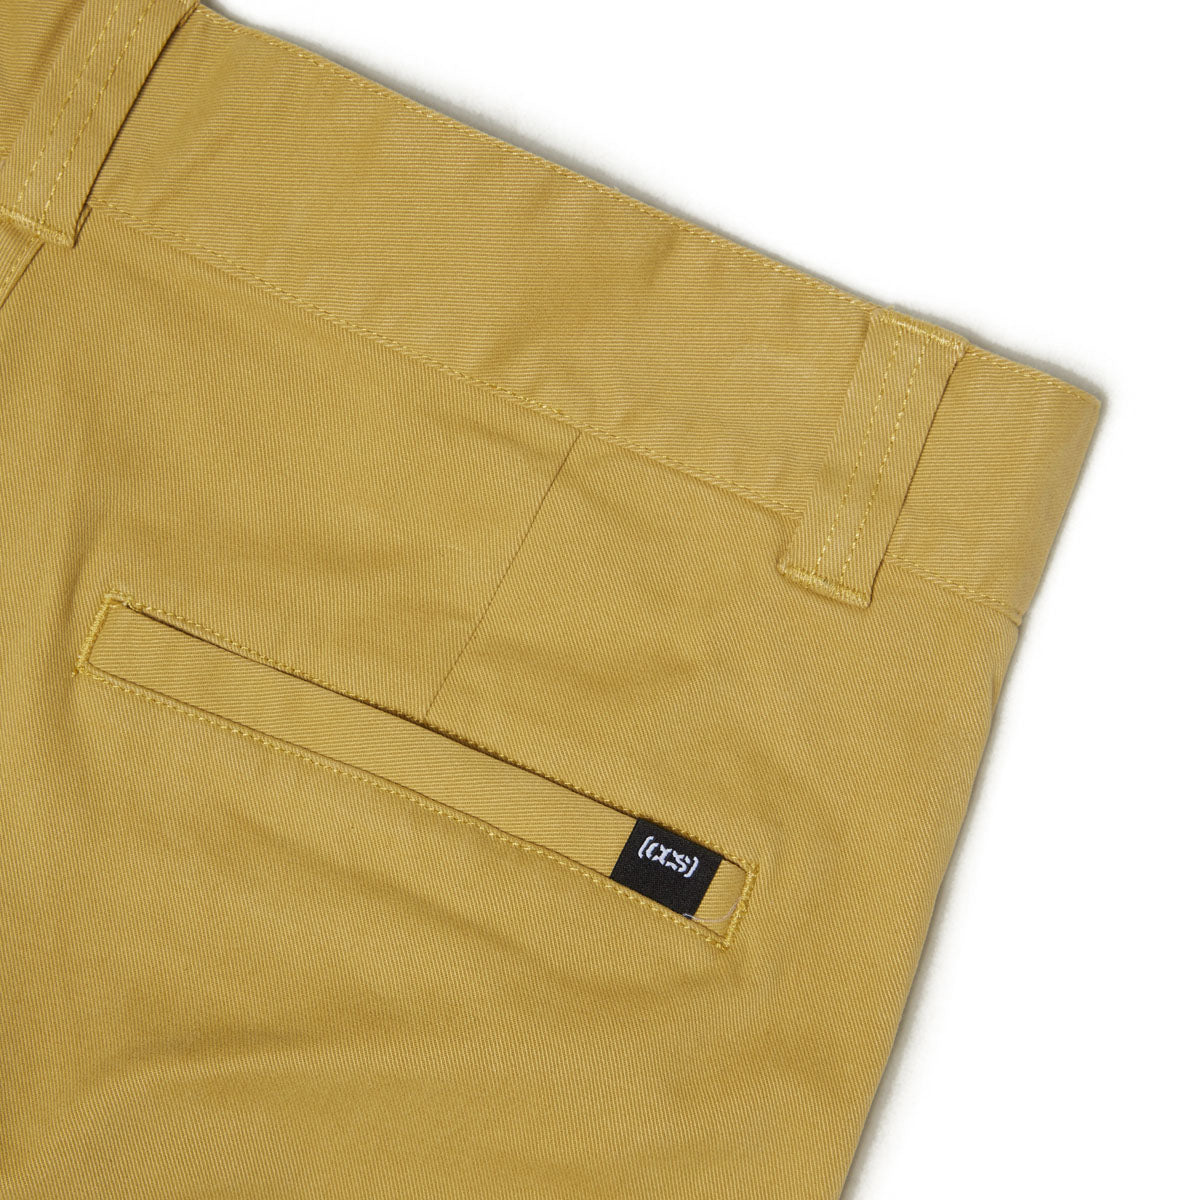 CCS Standard Plus Relaxed Chino Pants - Dark Mustard image 6